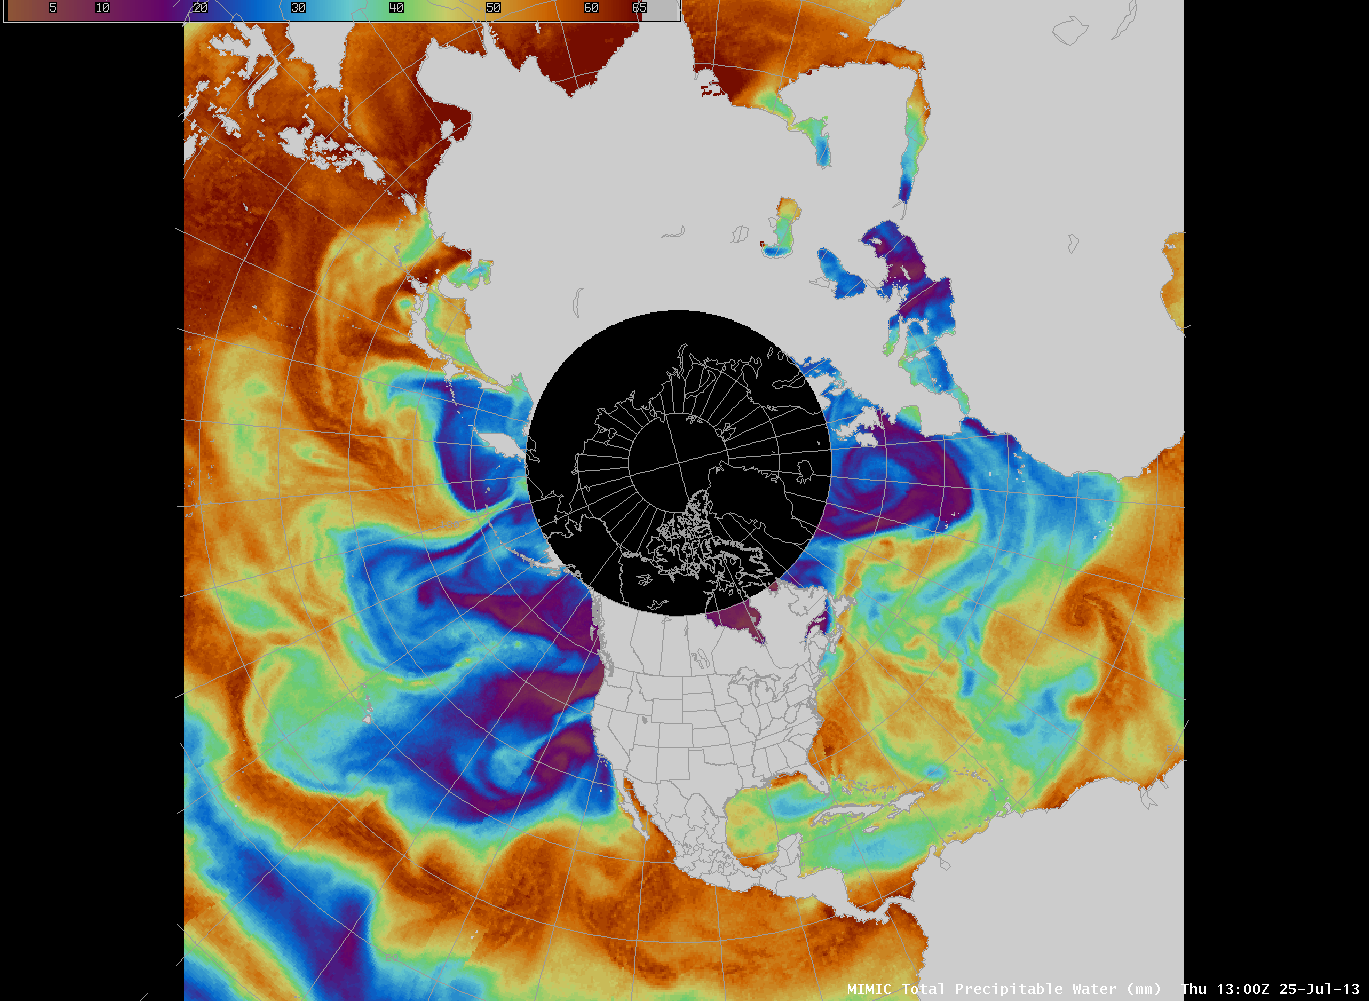 MIMIC Total Precipitable Water, 1300 UTC 25 July 2013